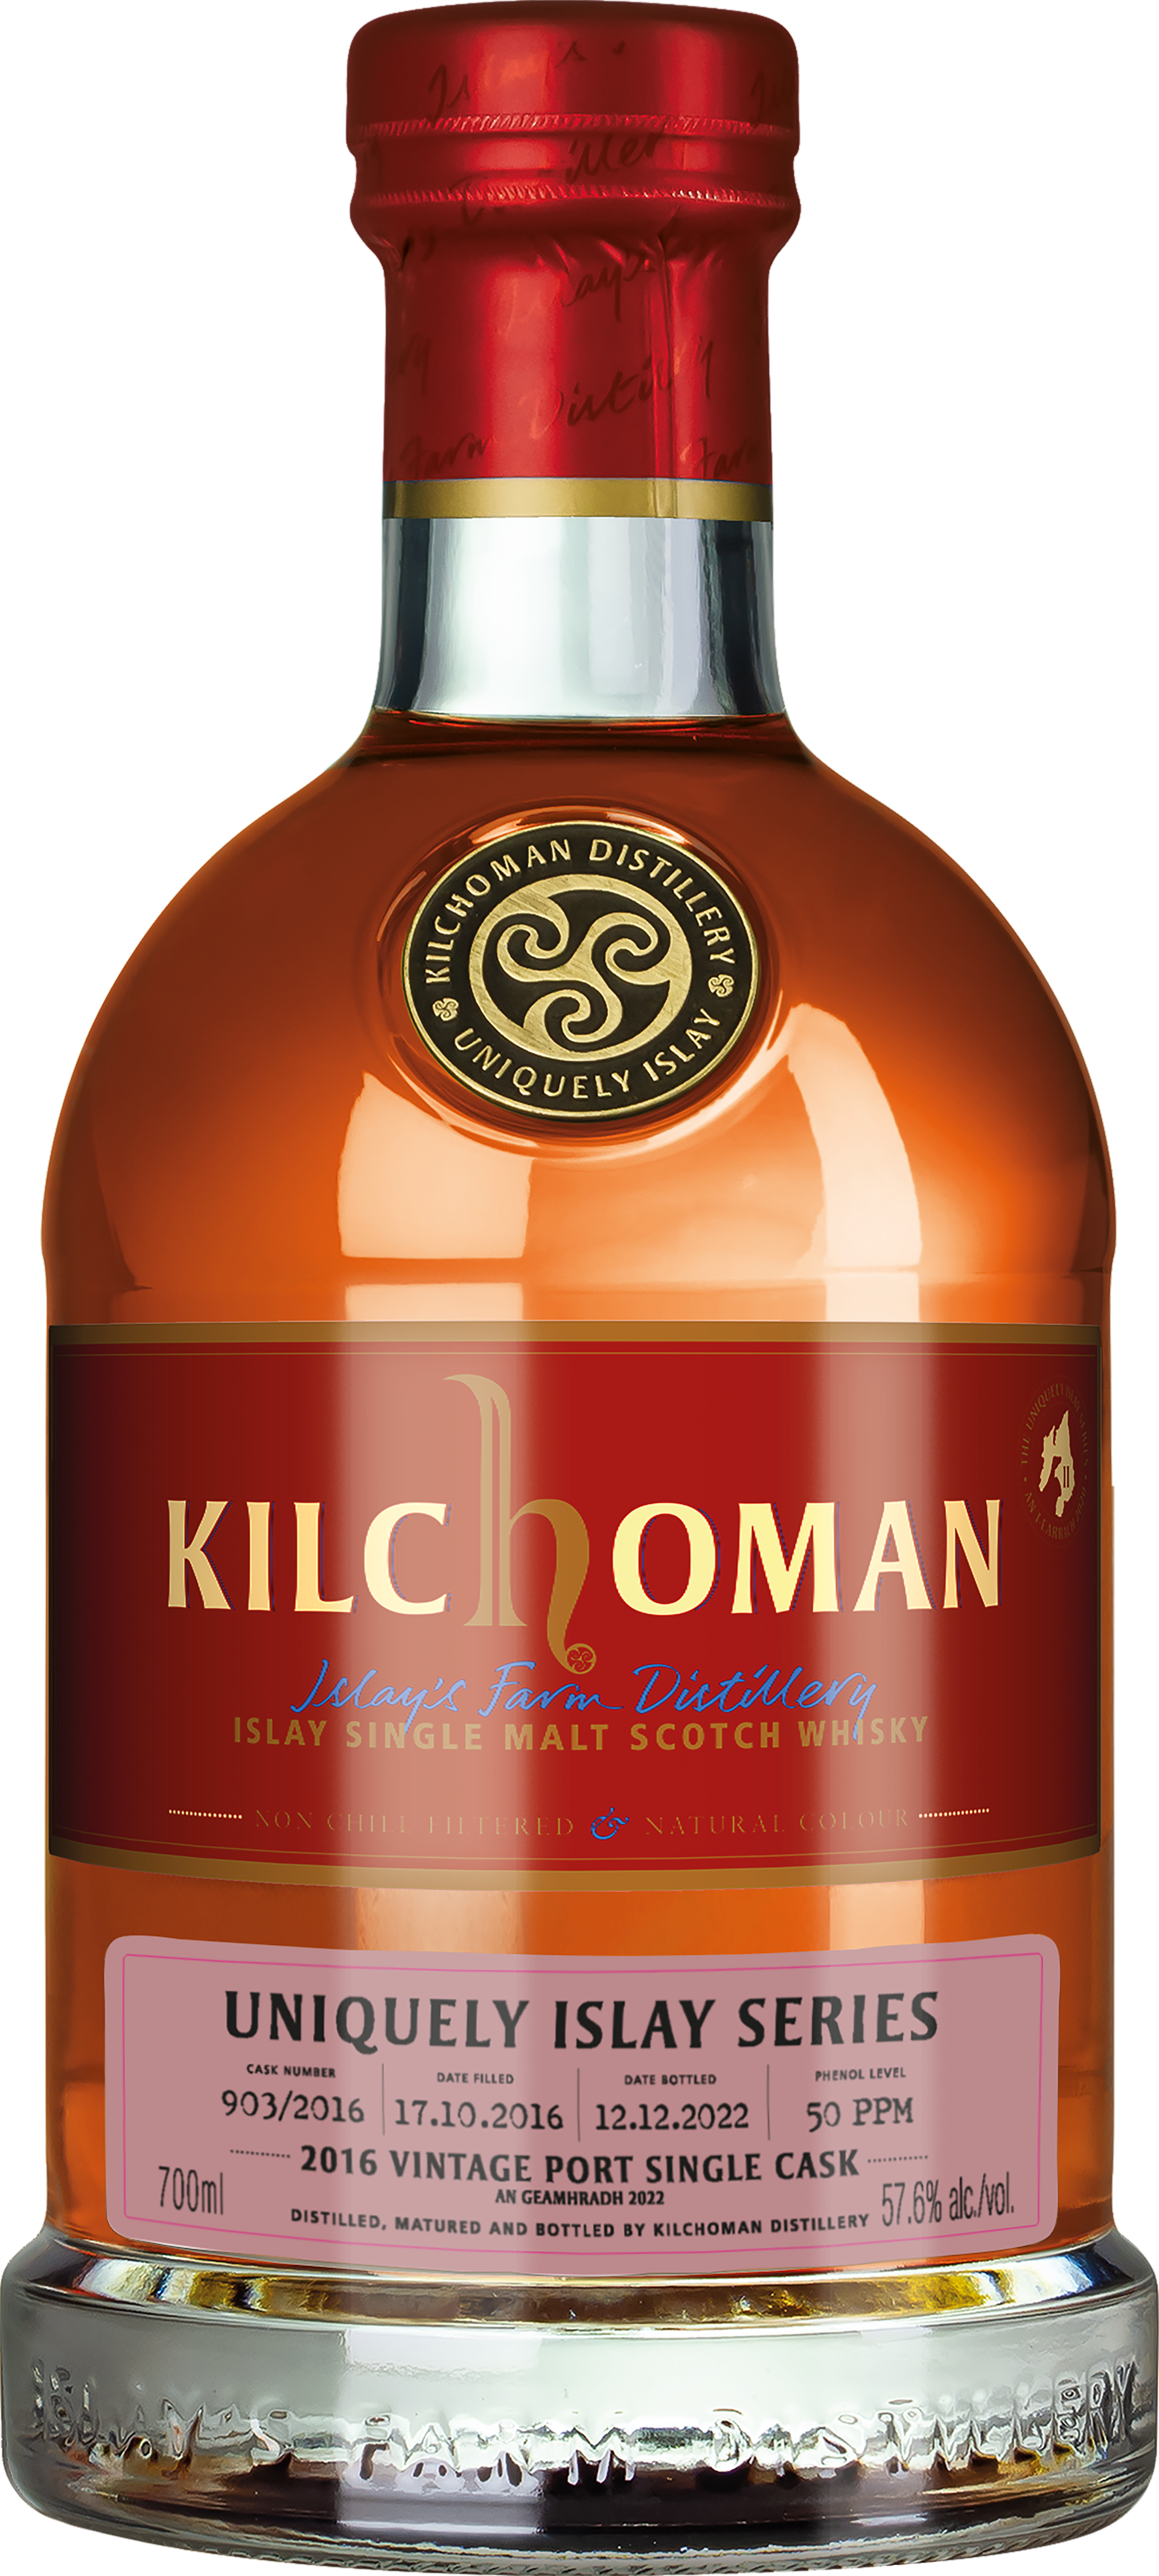 Kilchoman Uniquely Islay Series - 2016 Vintage Port Single Cask